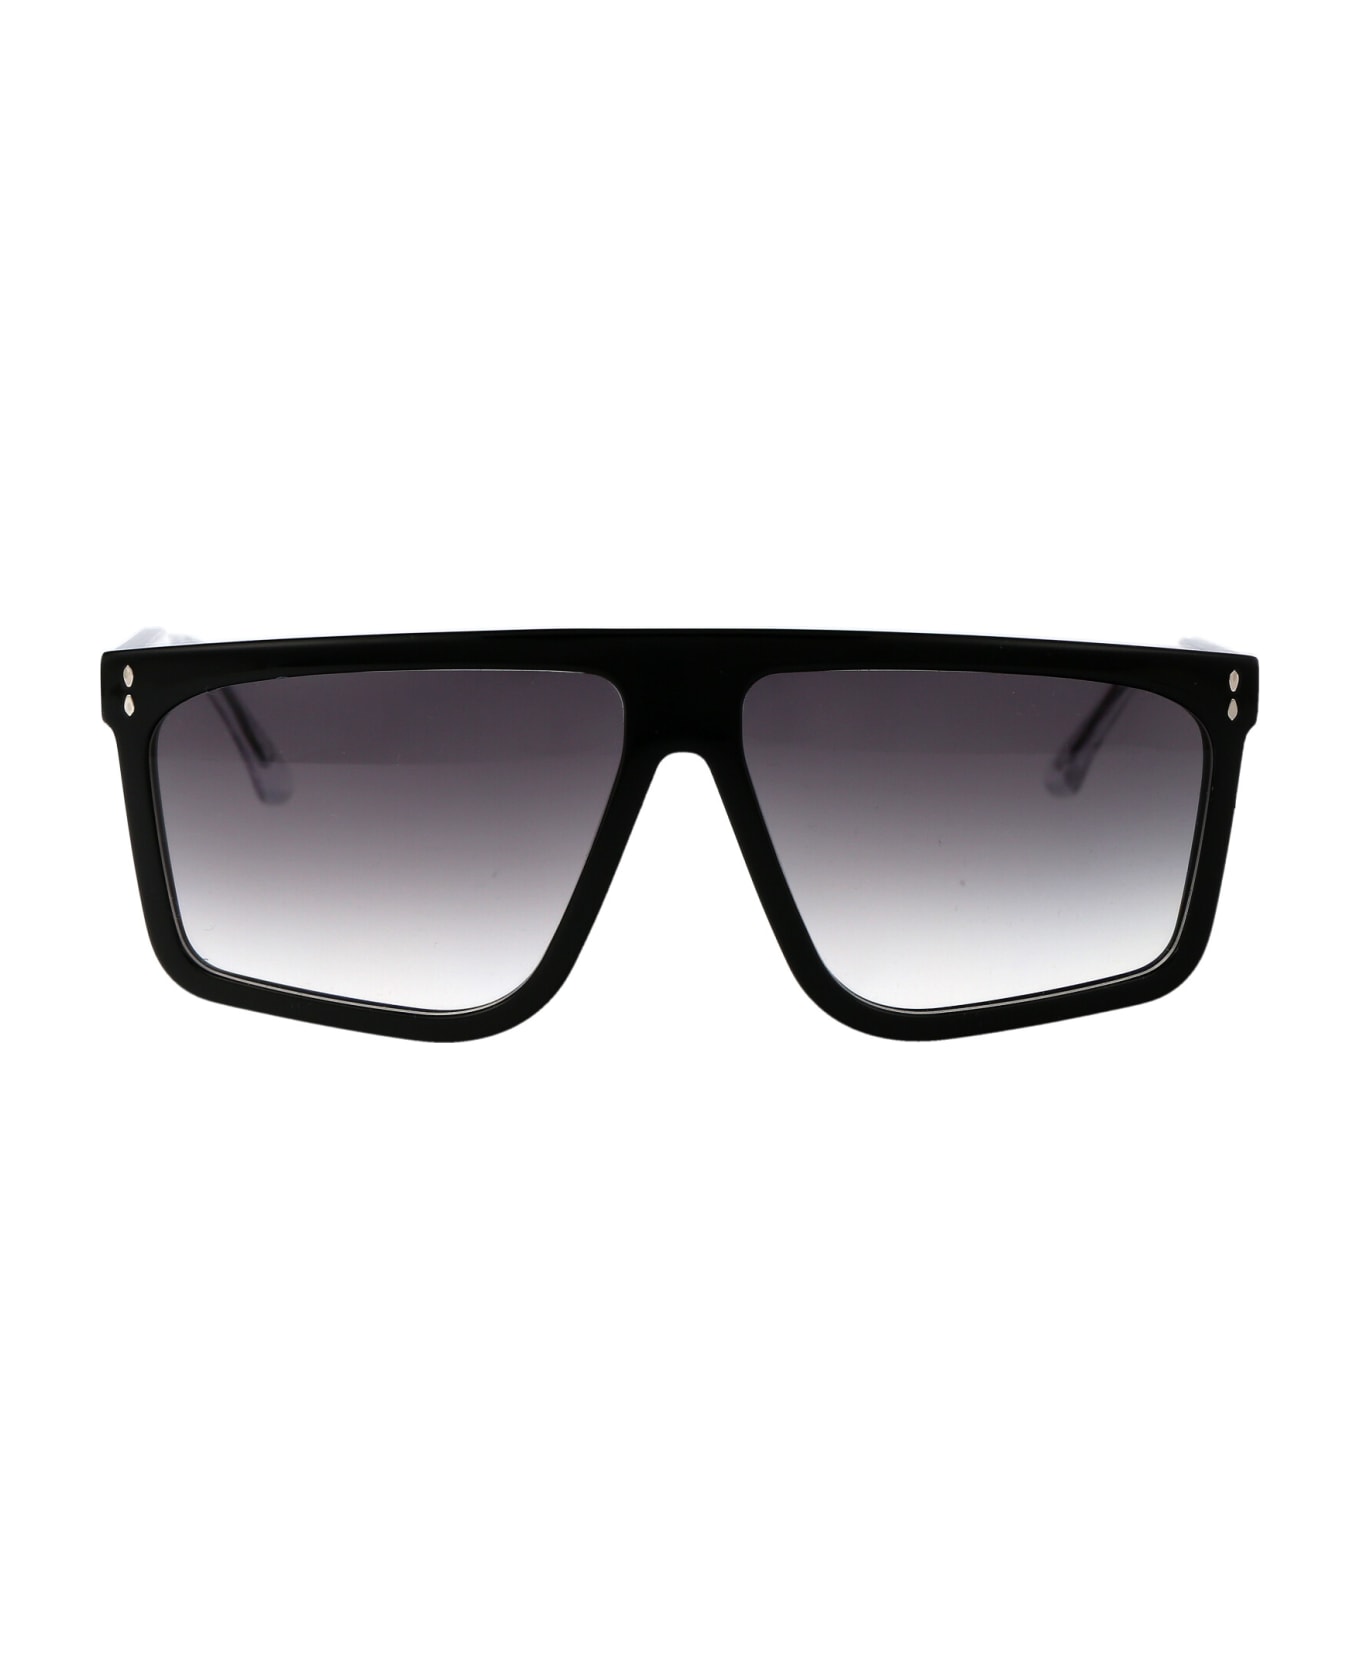 Isabel Marant Im 0164/s Sunglasses - 8079O BLACK サングラス